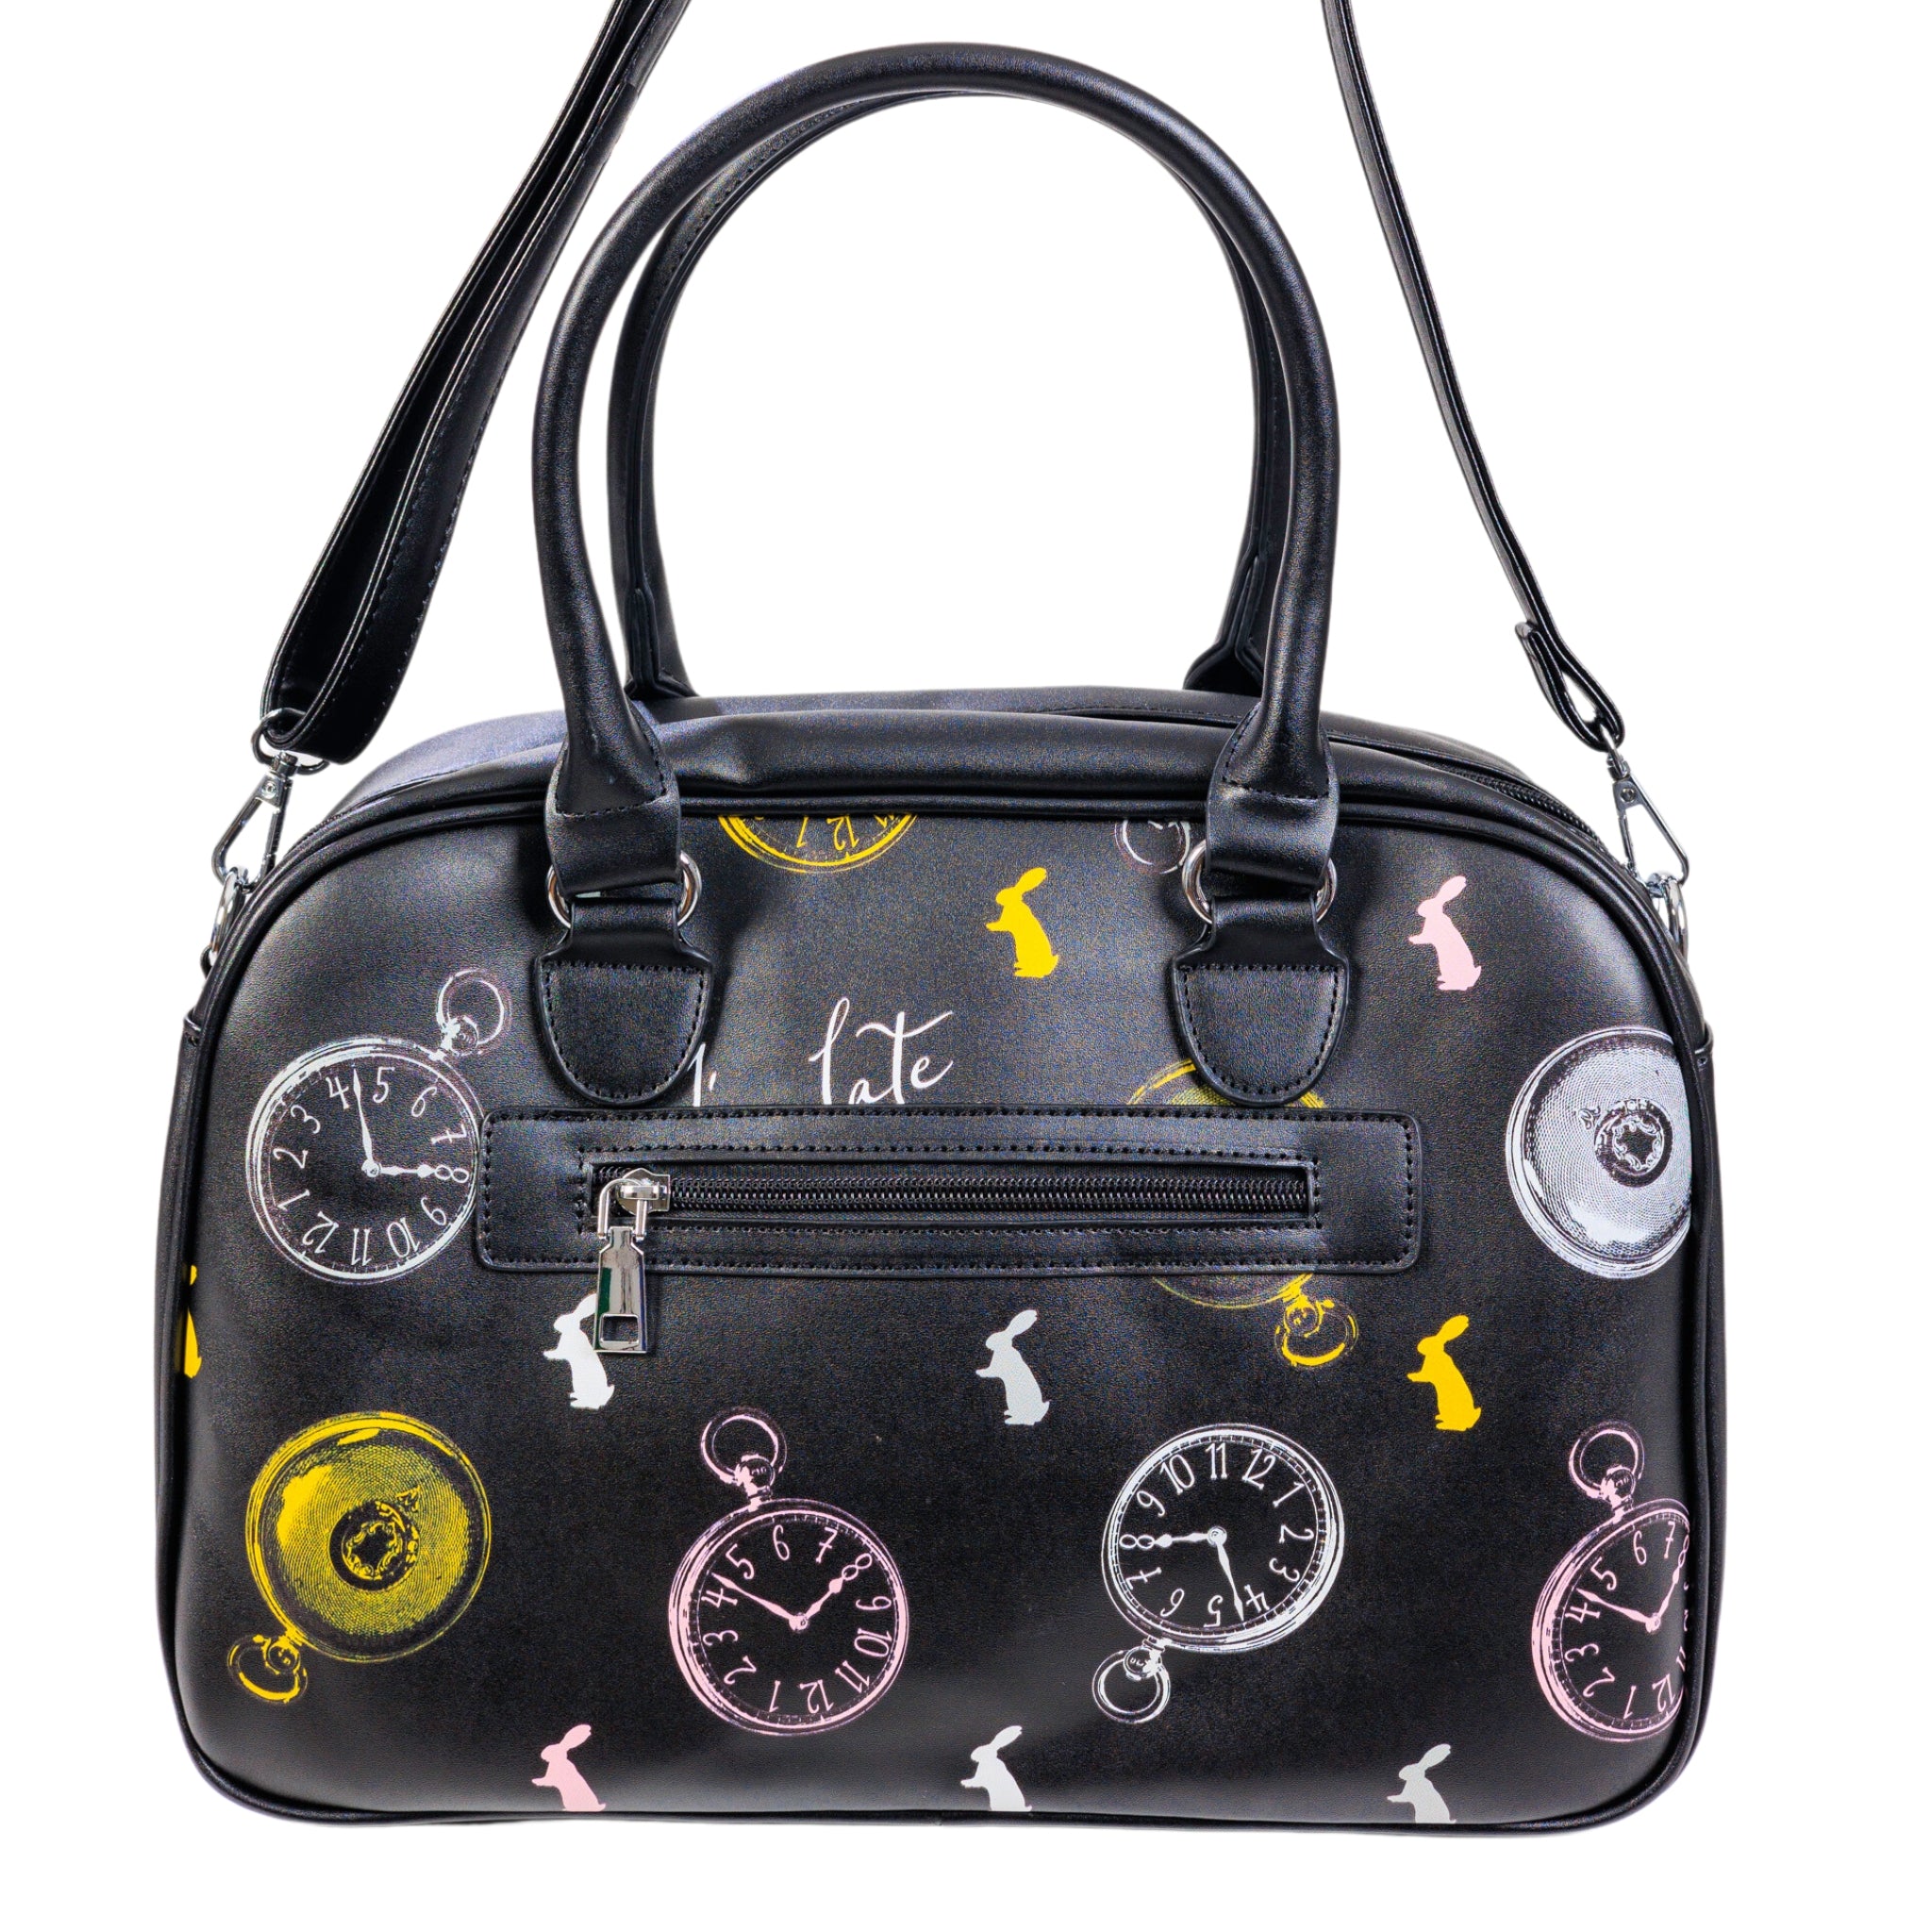 Von Dutch Beige Tan Brown Leather Mini Bowling Bag Purse Handbag Pocketbook  Satchel - $95 (36% Off Retail) - From faeriekiss